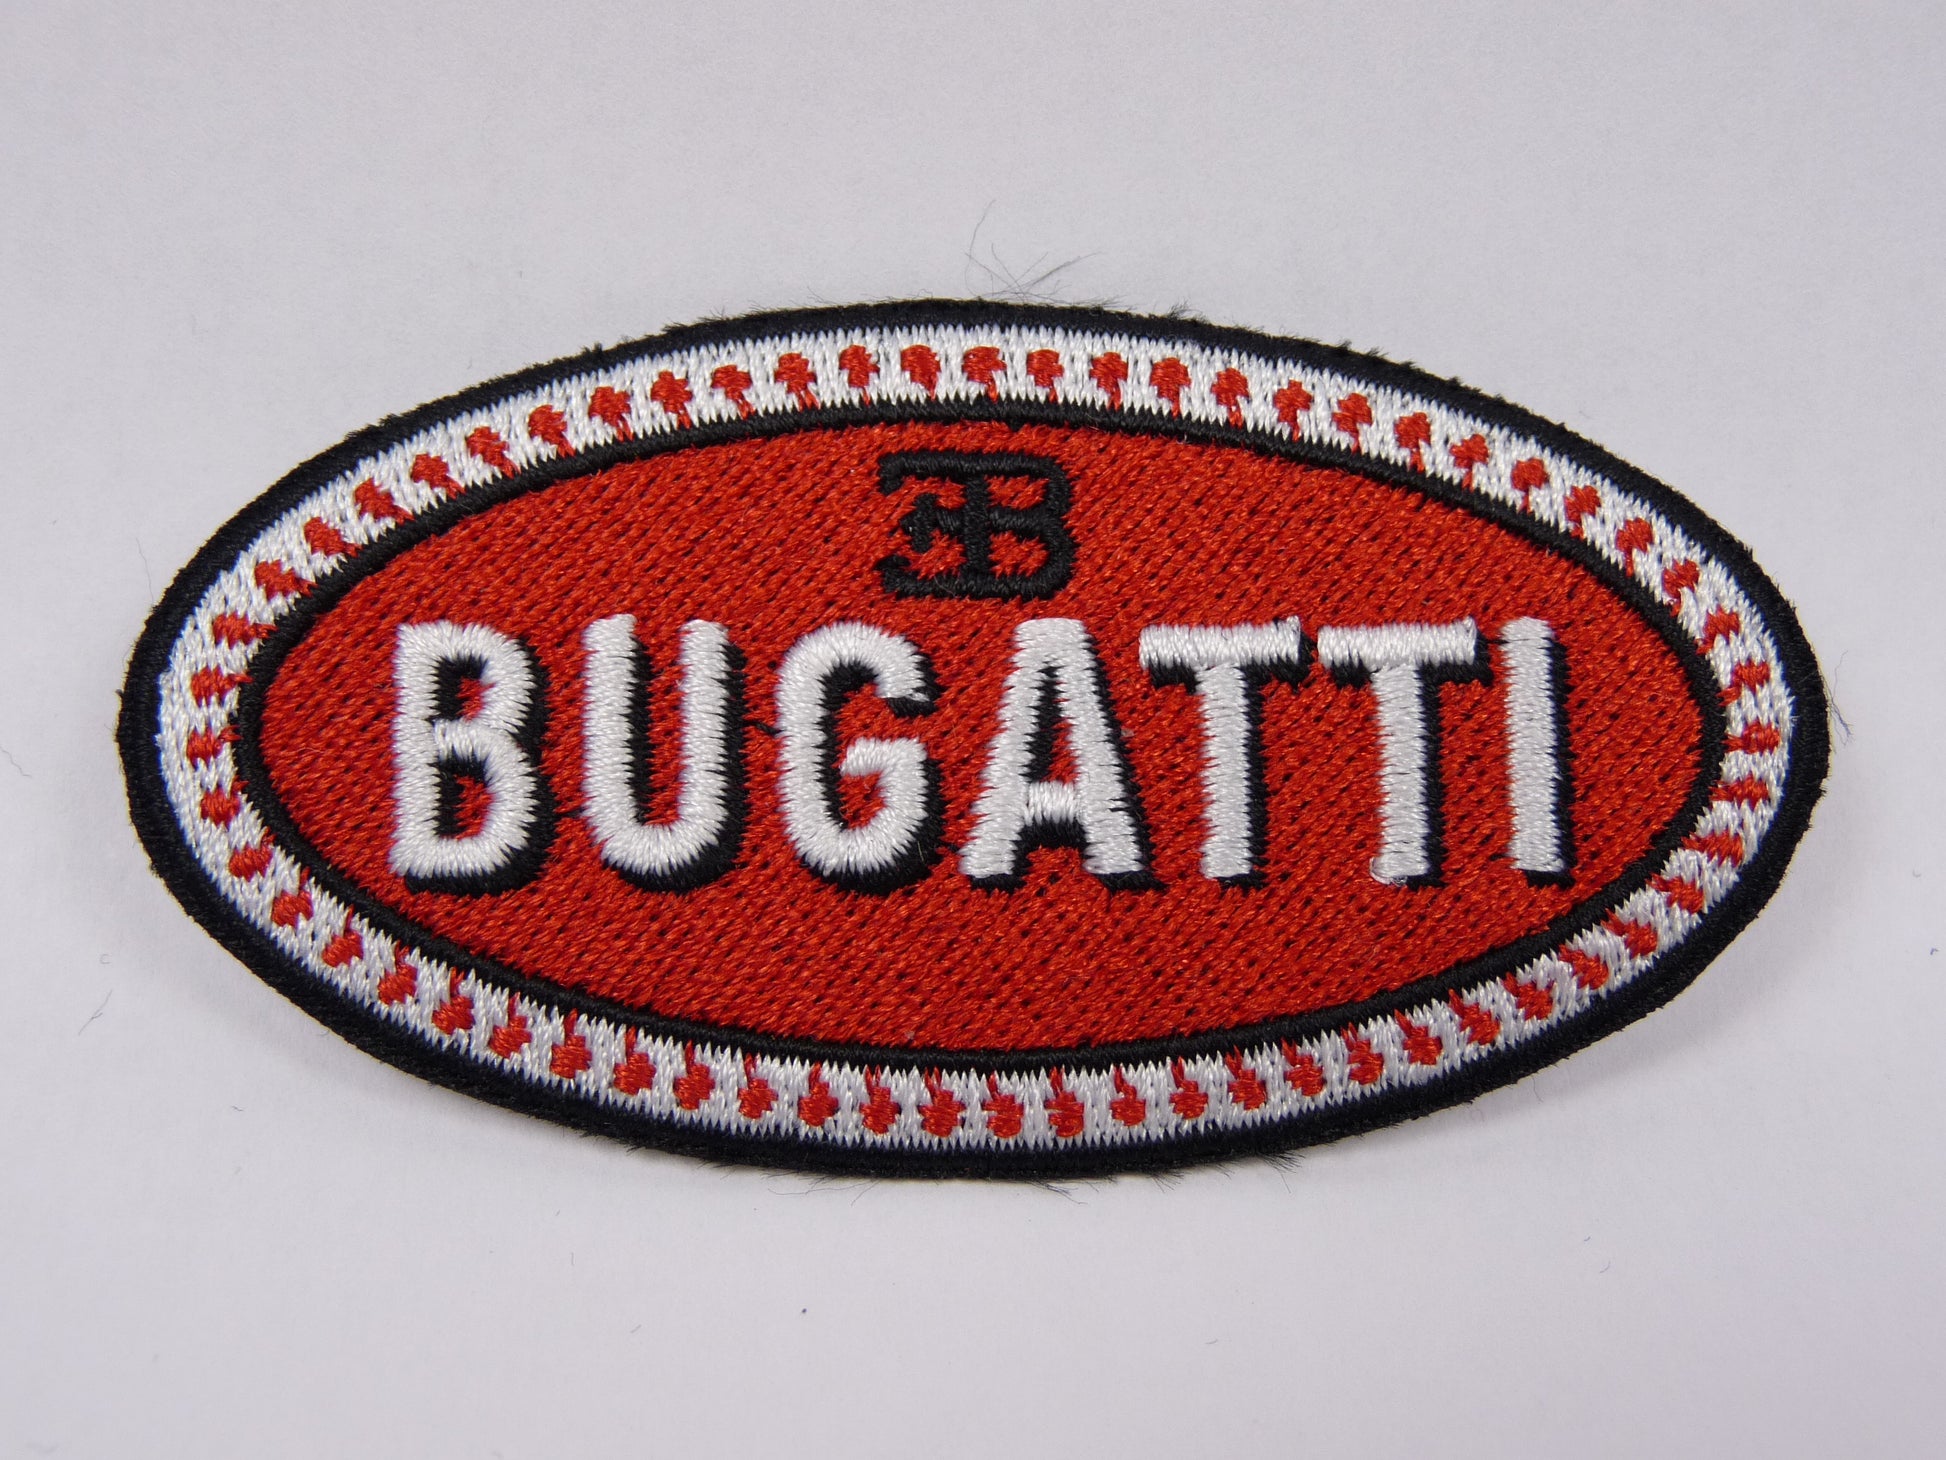 PTC38 Patch brodé thermocollé : logo Bugatti largeur environ 8.2